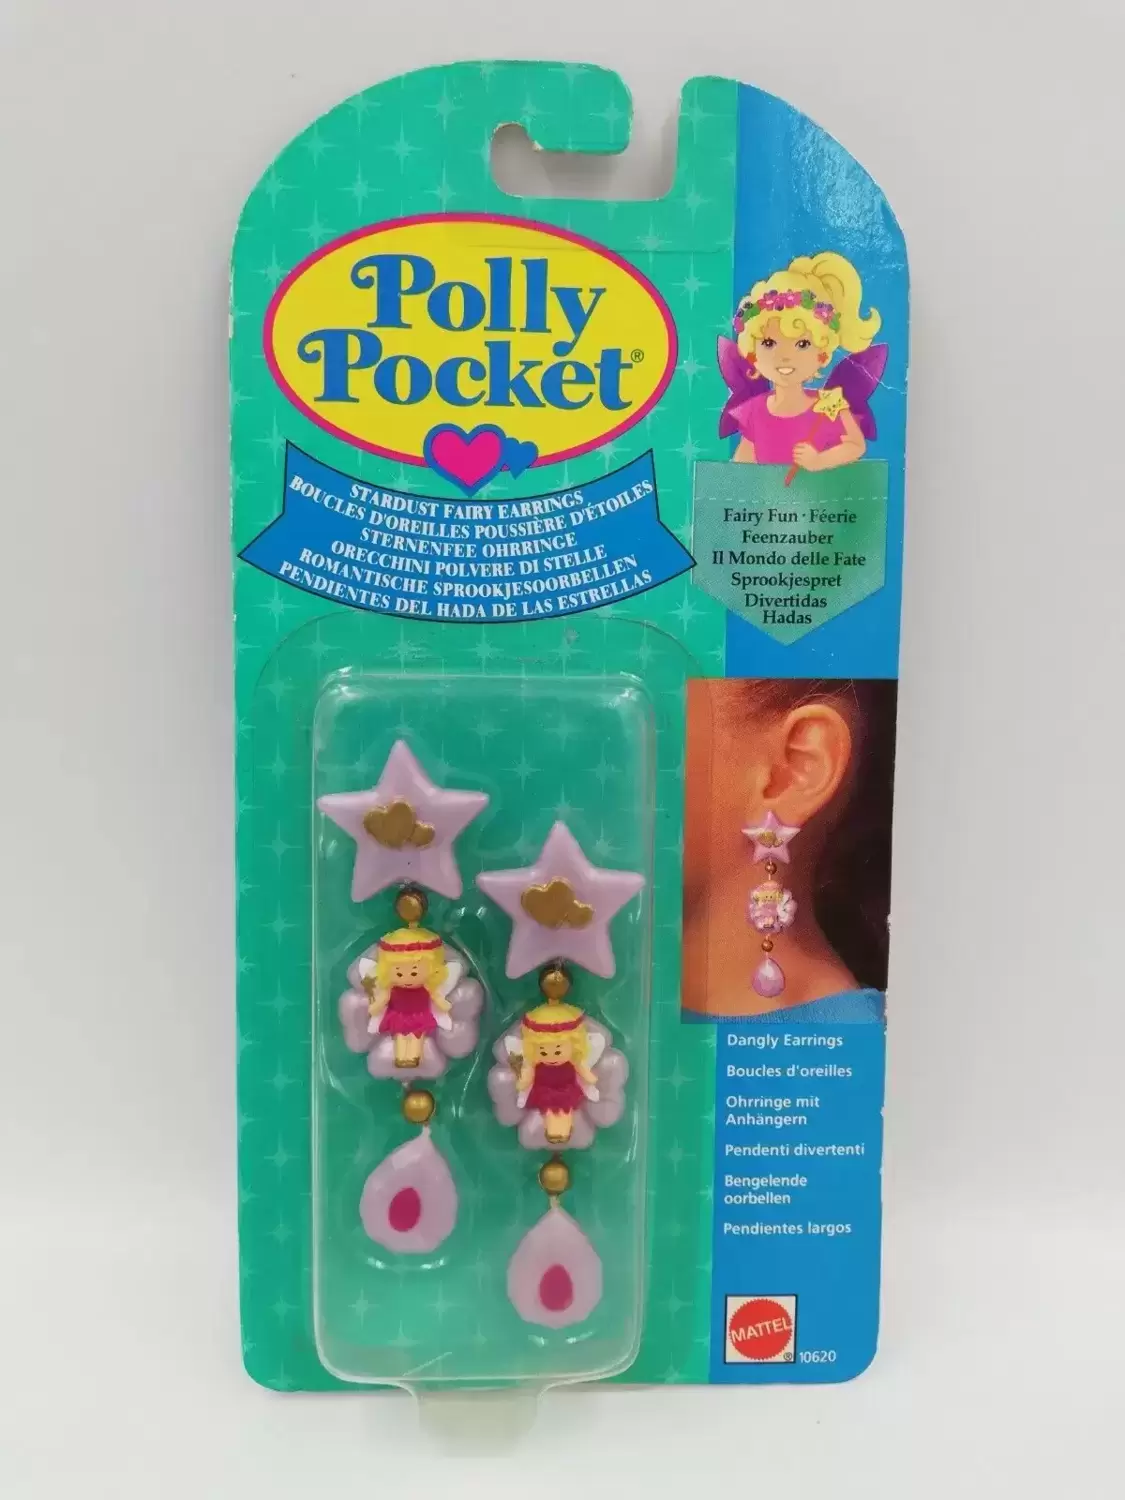 Polly Pocket Bluebird (vintage) - Stardust Fairy Earrings